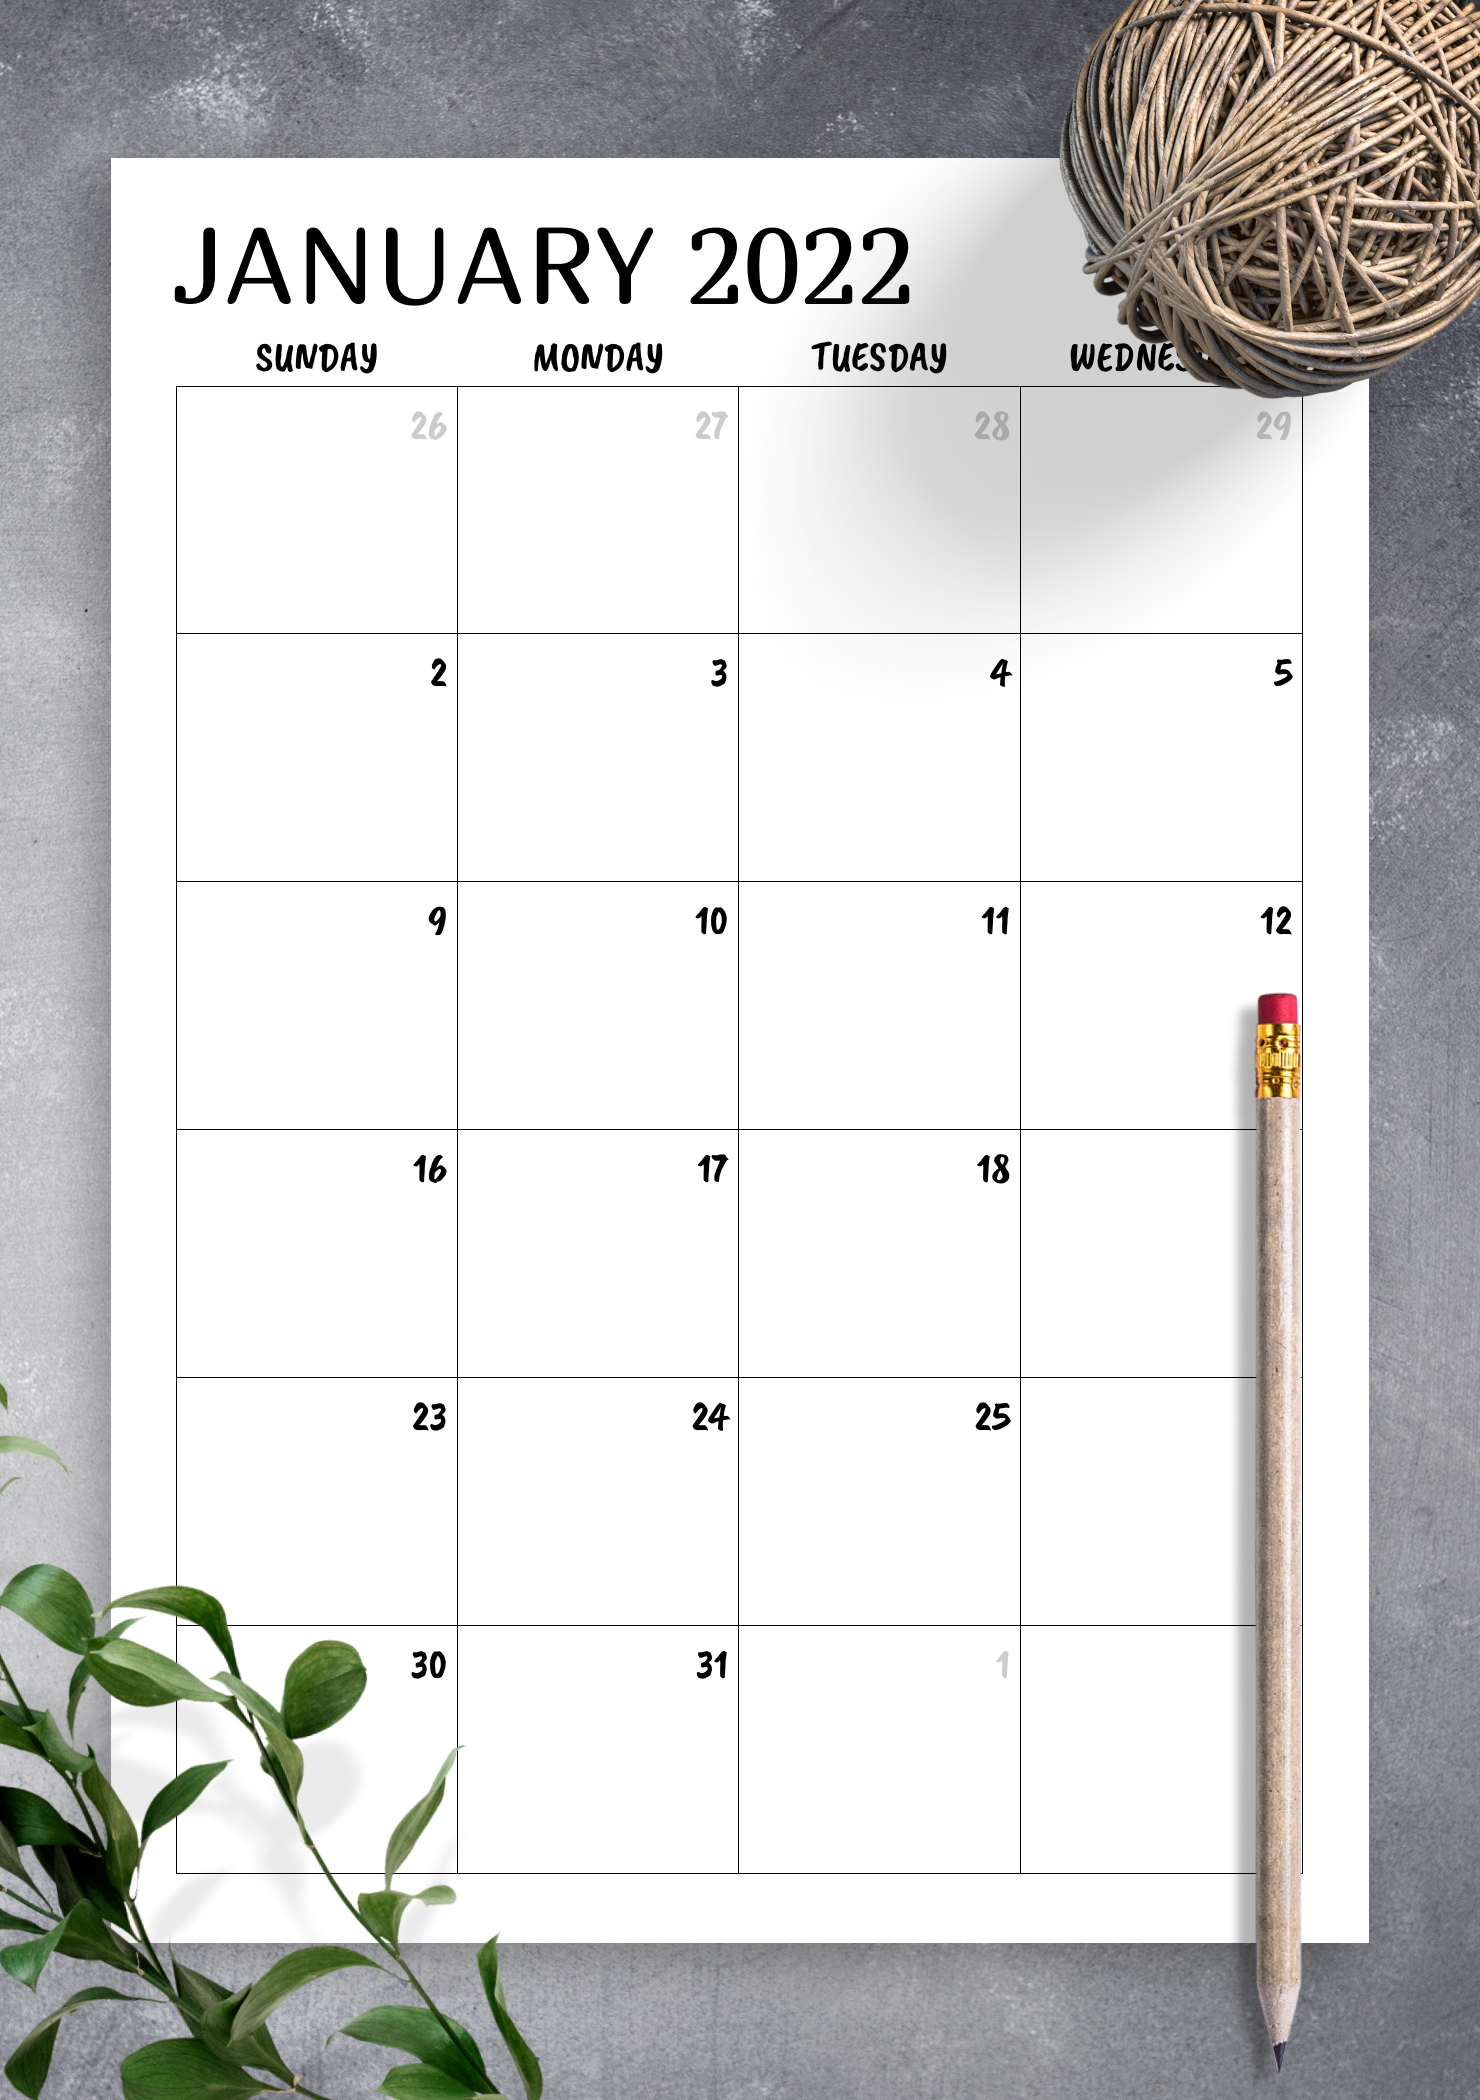 Printable Month Calendars